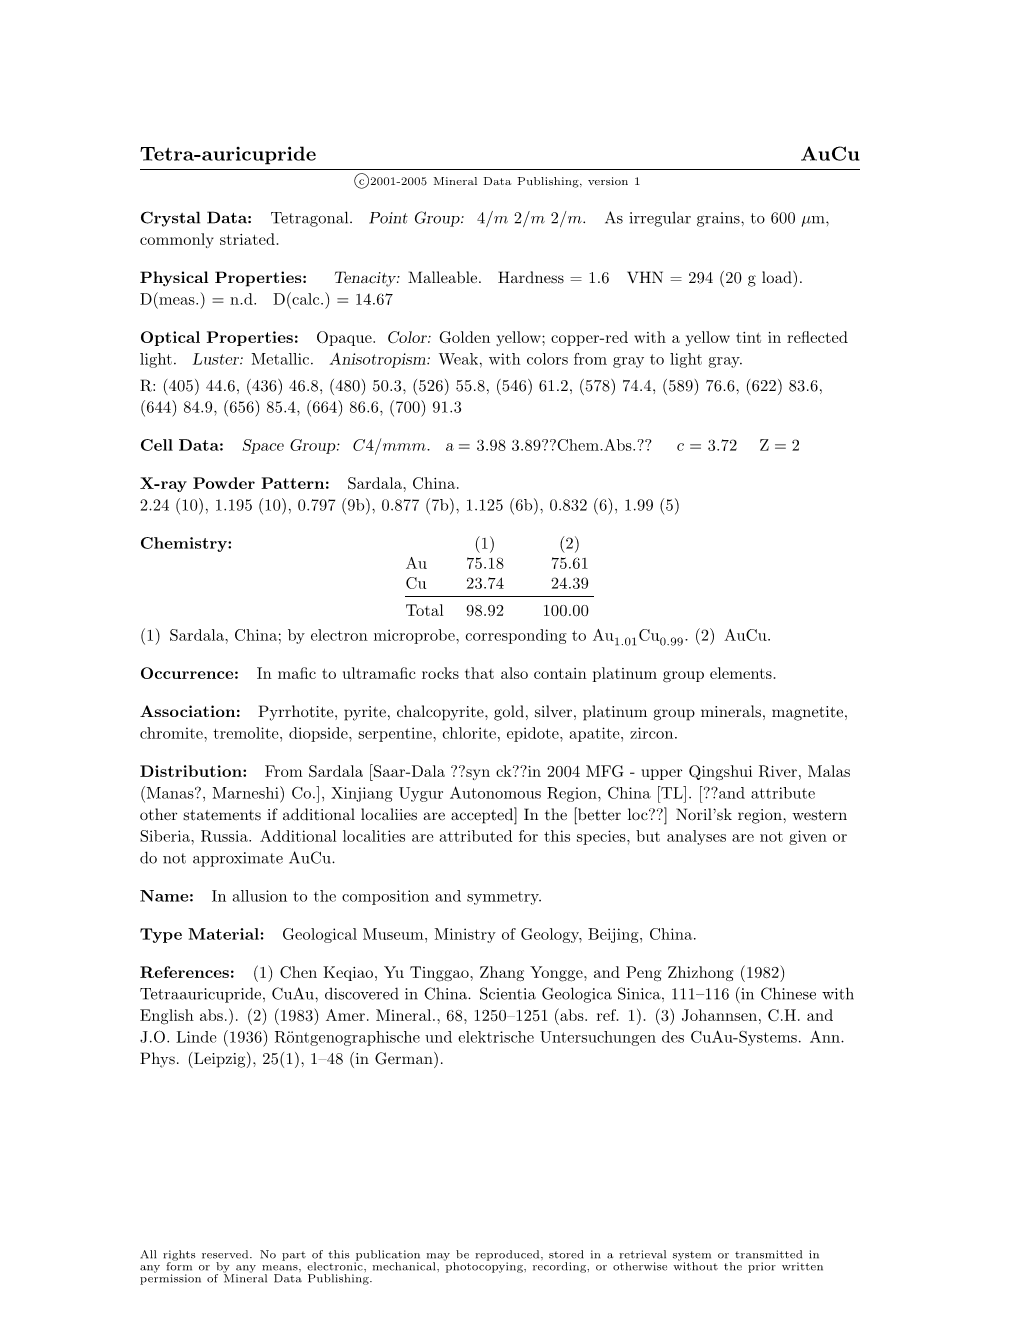 Tetra-Auricupride Aucu C 2001-2005 Mineral Data Publishing, Version 1